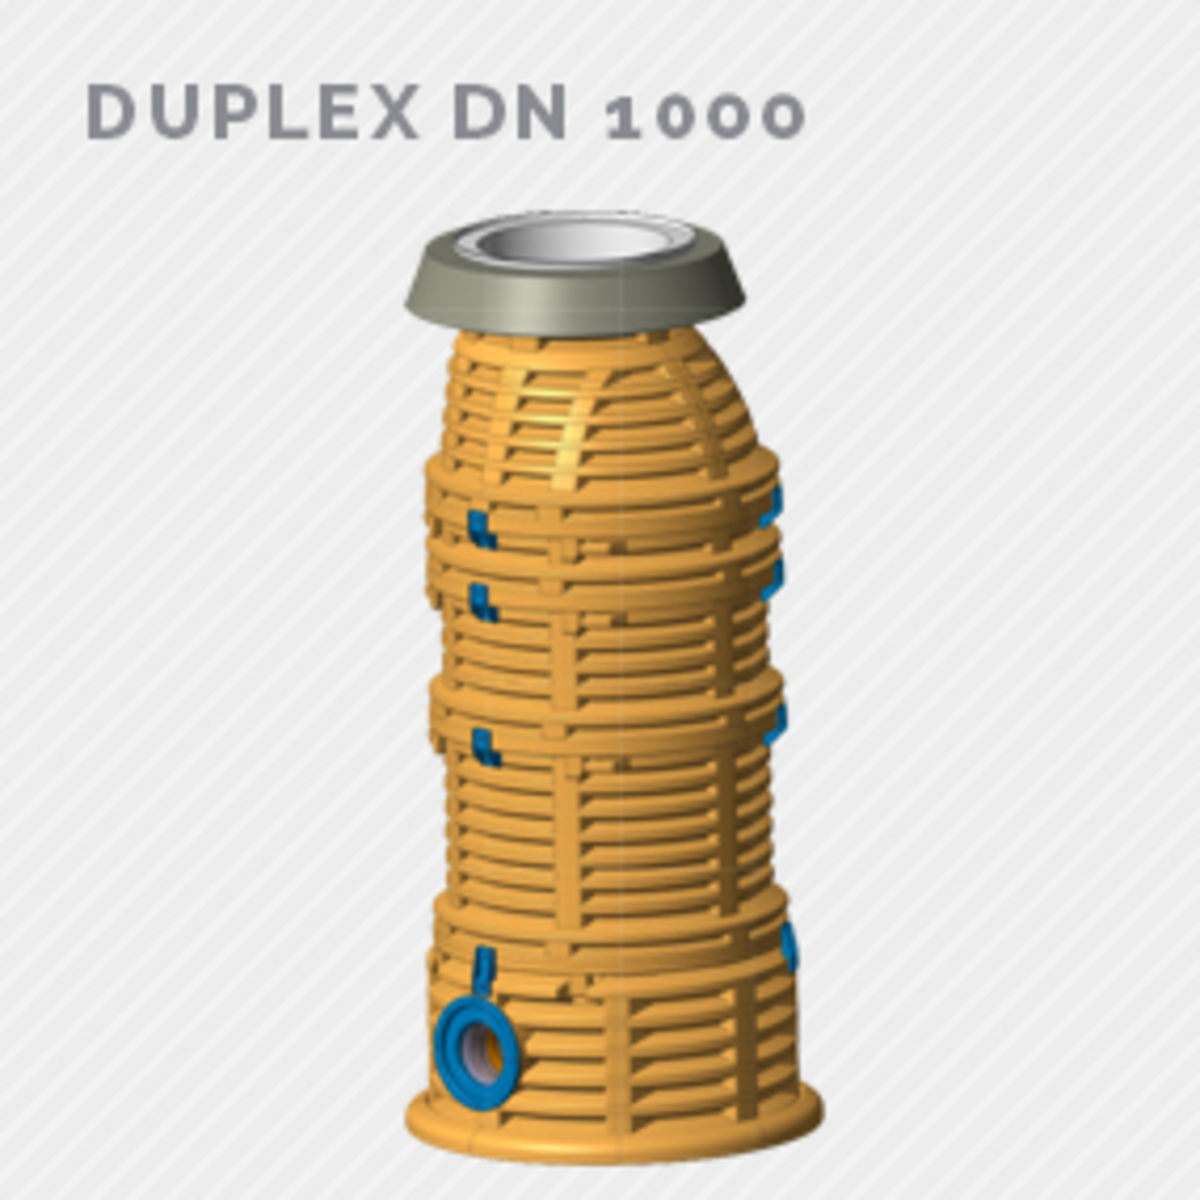 duplex manhole 1000 product Folder